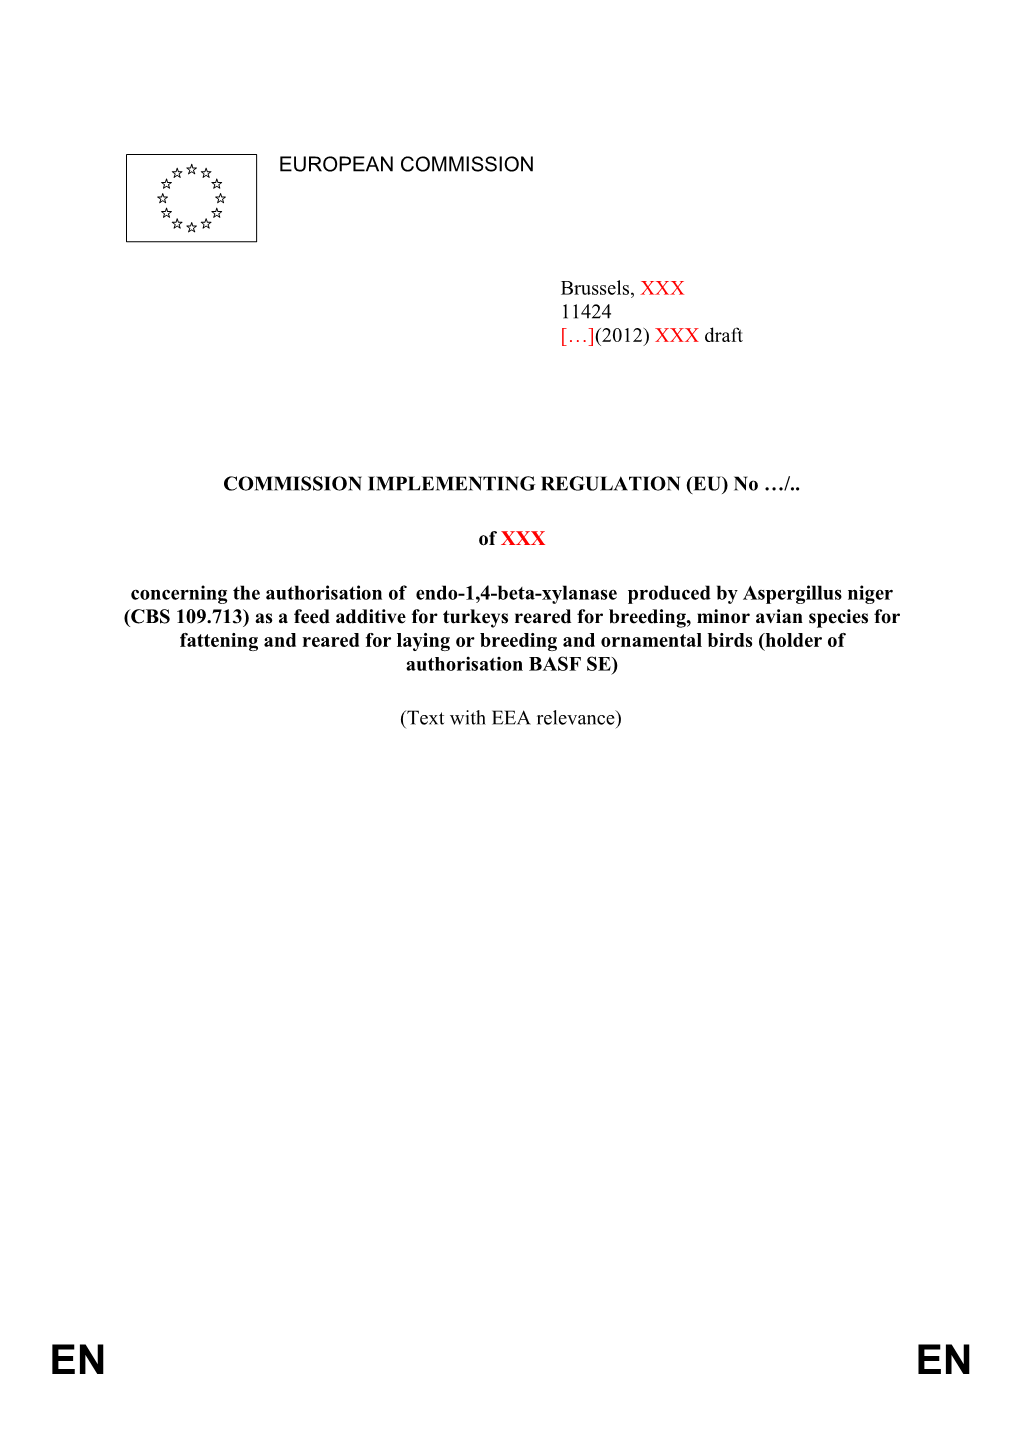 COMMISSION IMPLEMENTING REGULATION (EU) No s3